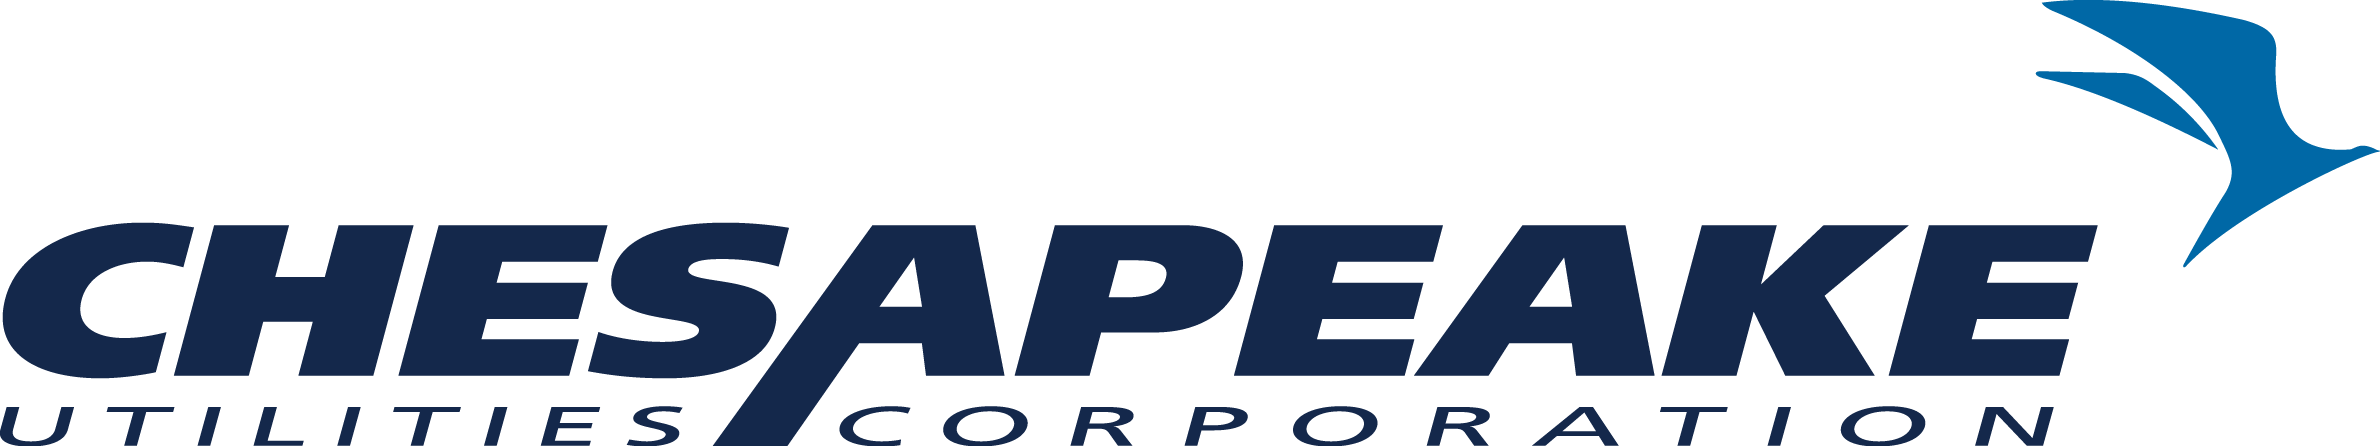 Chesapeake Utilities Corporation logo